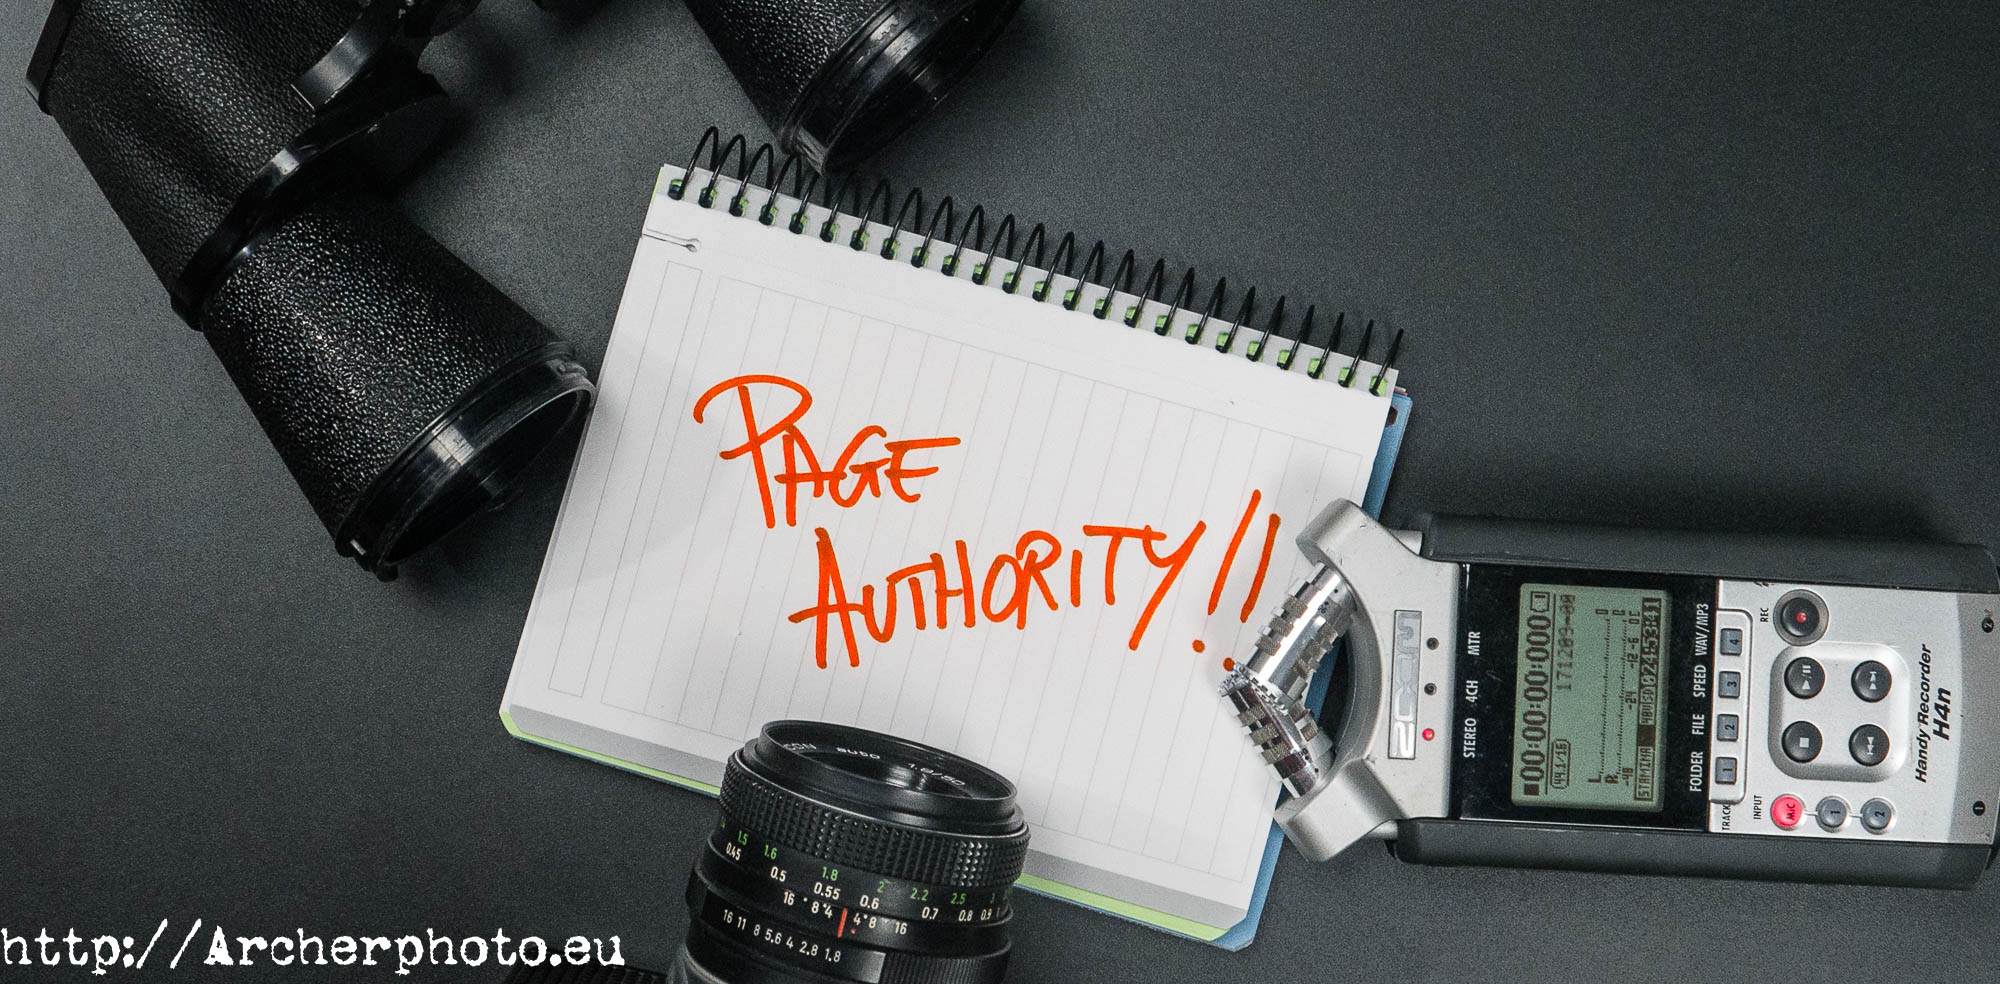 Page authority,SEO,fotografo